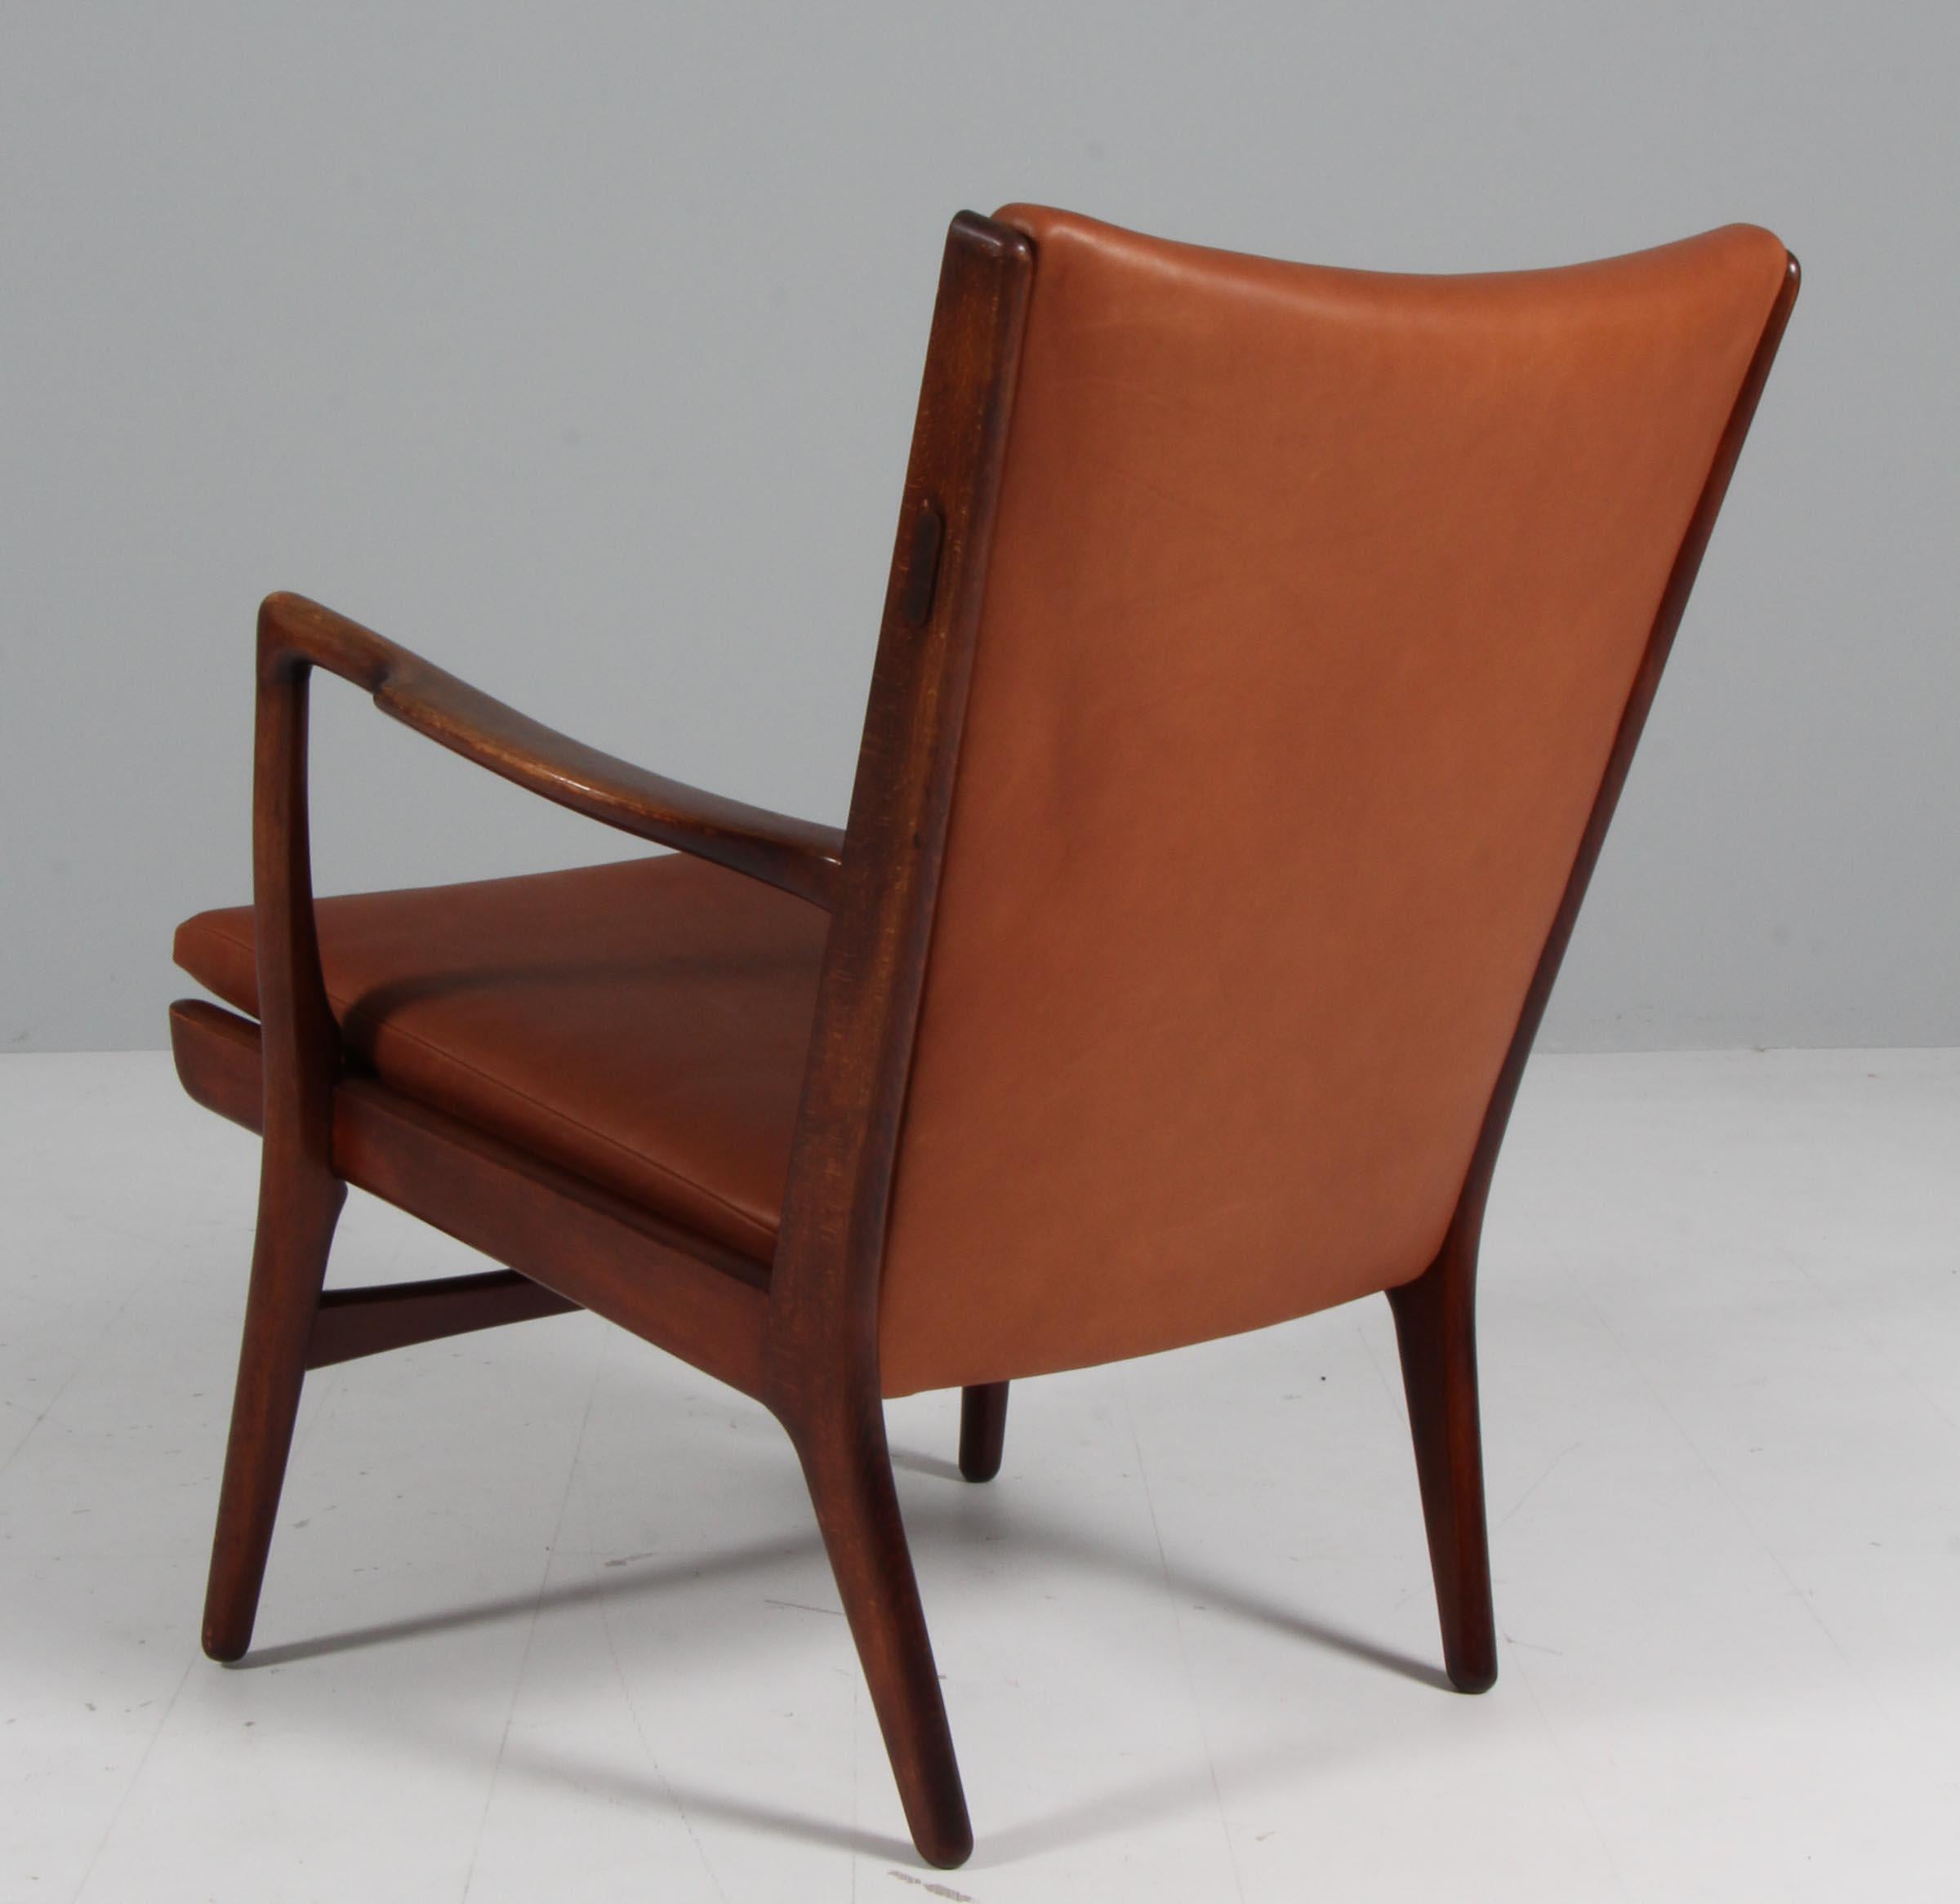 Leather Lounge / armchair, Model AP16, by Hans Wegner for A.P. Stolen. Full grain